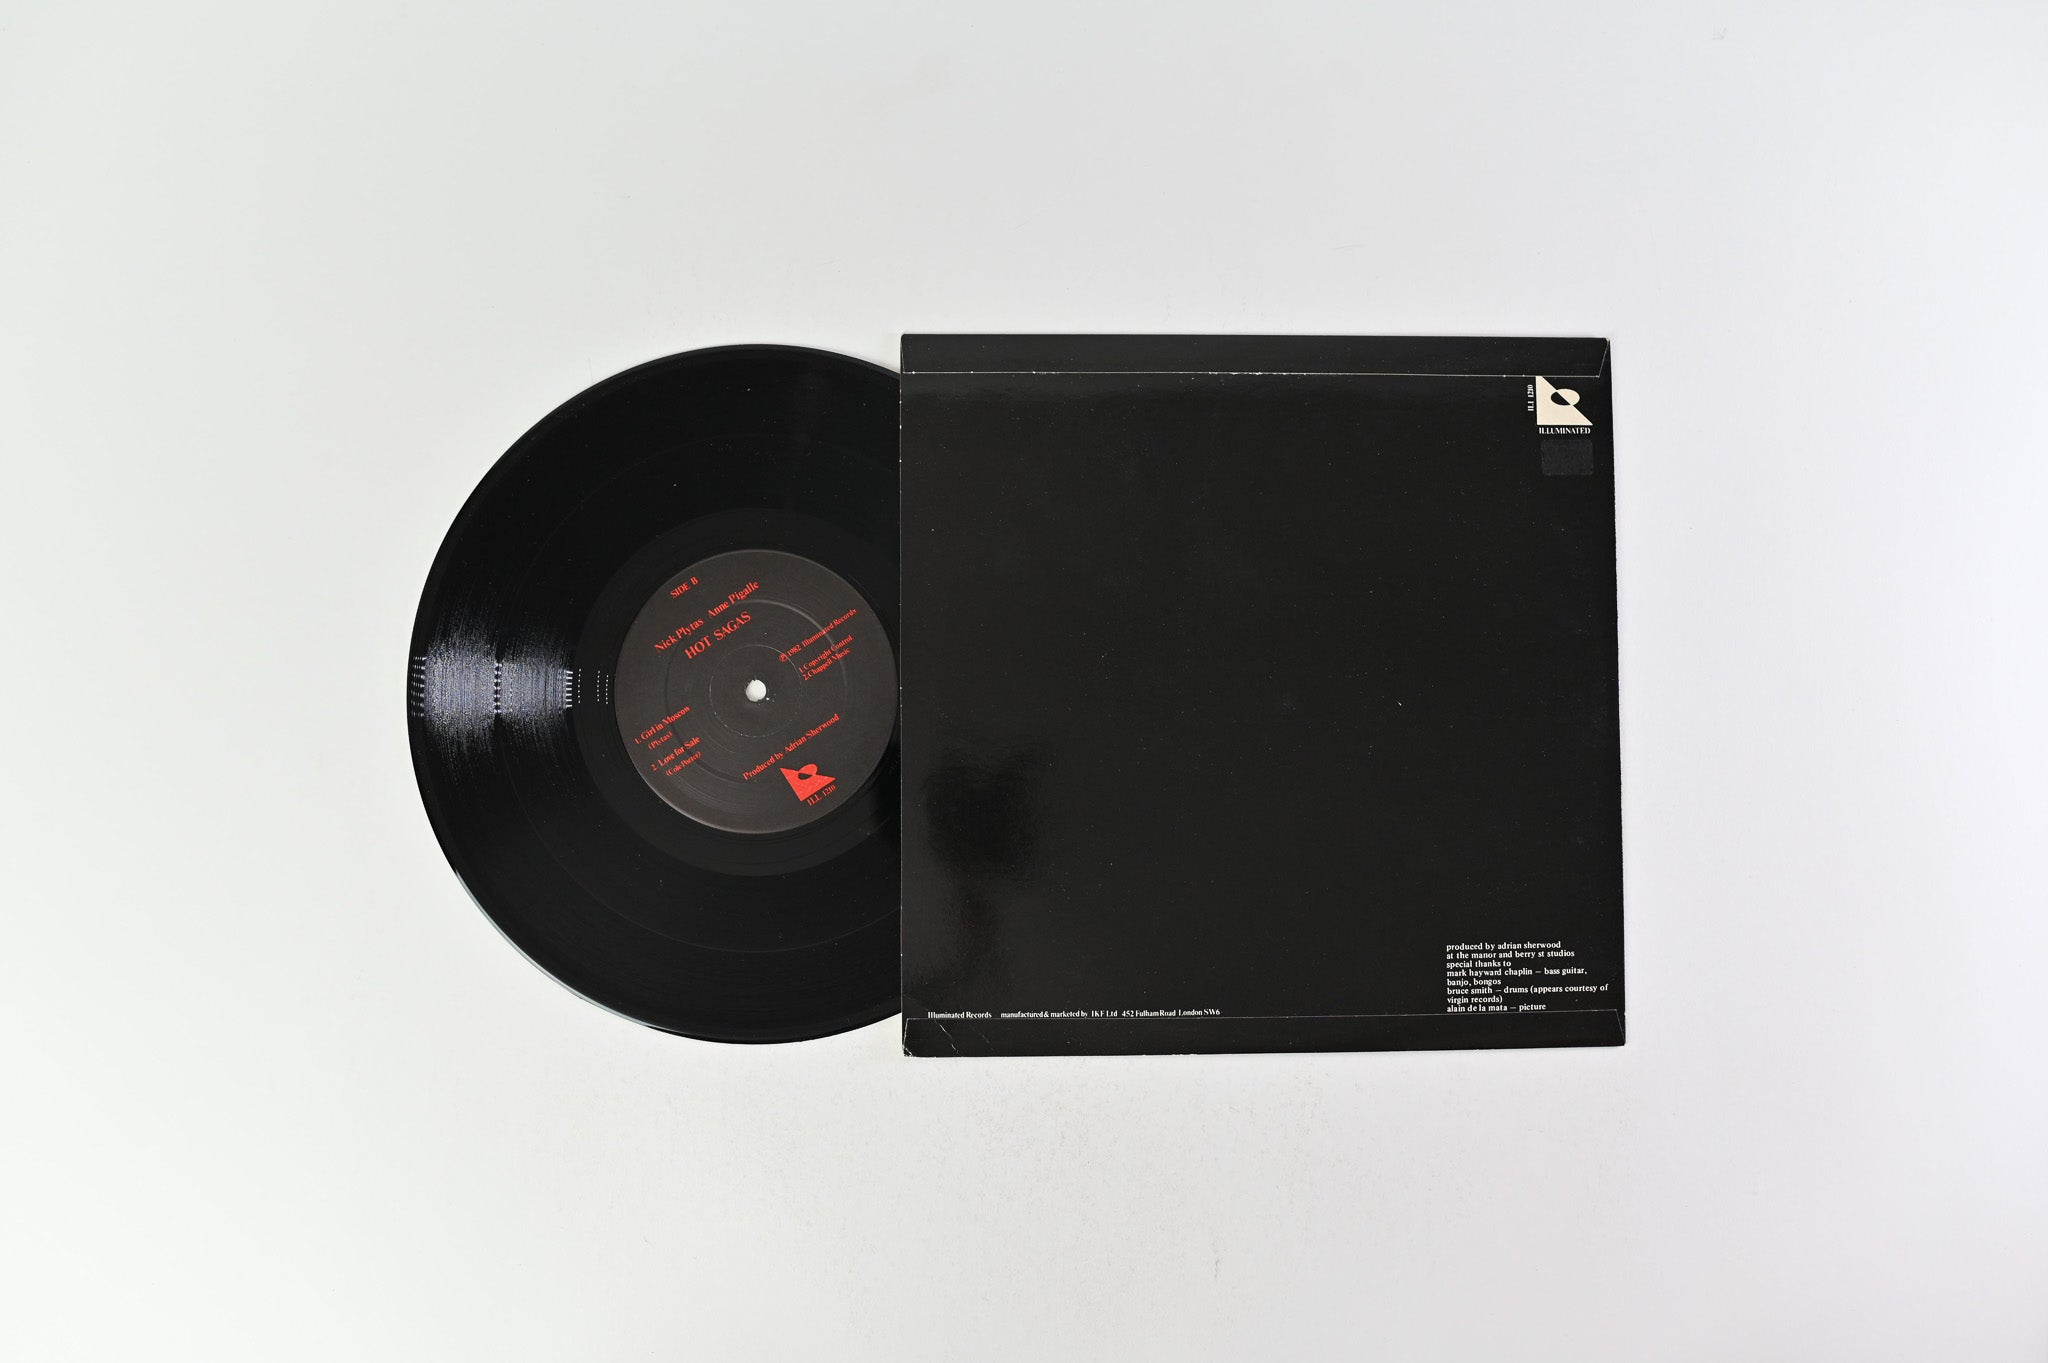 Nick Plytas, Anne Pigalle - Hot Sagas on Illuminated Records - 10" Vinyl